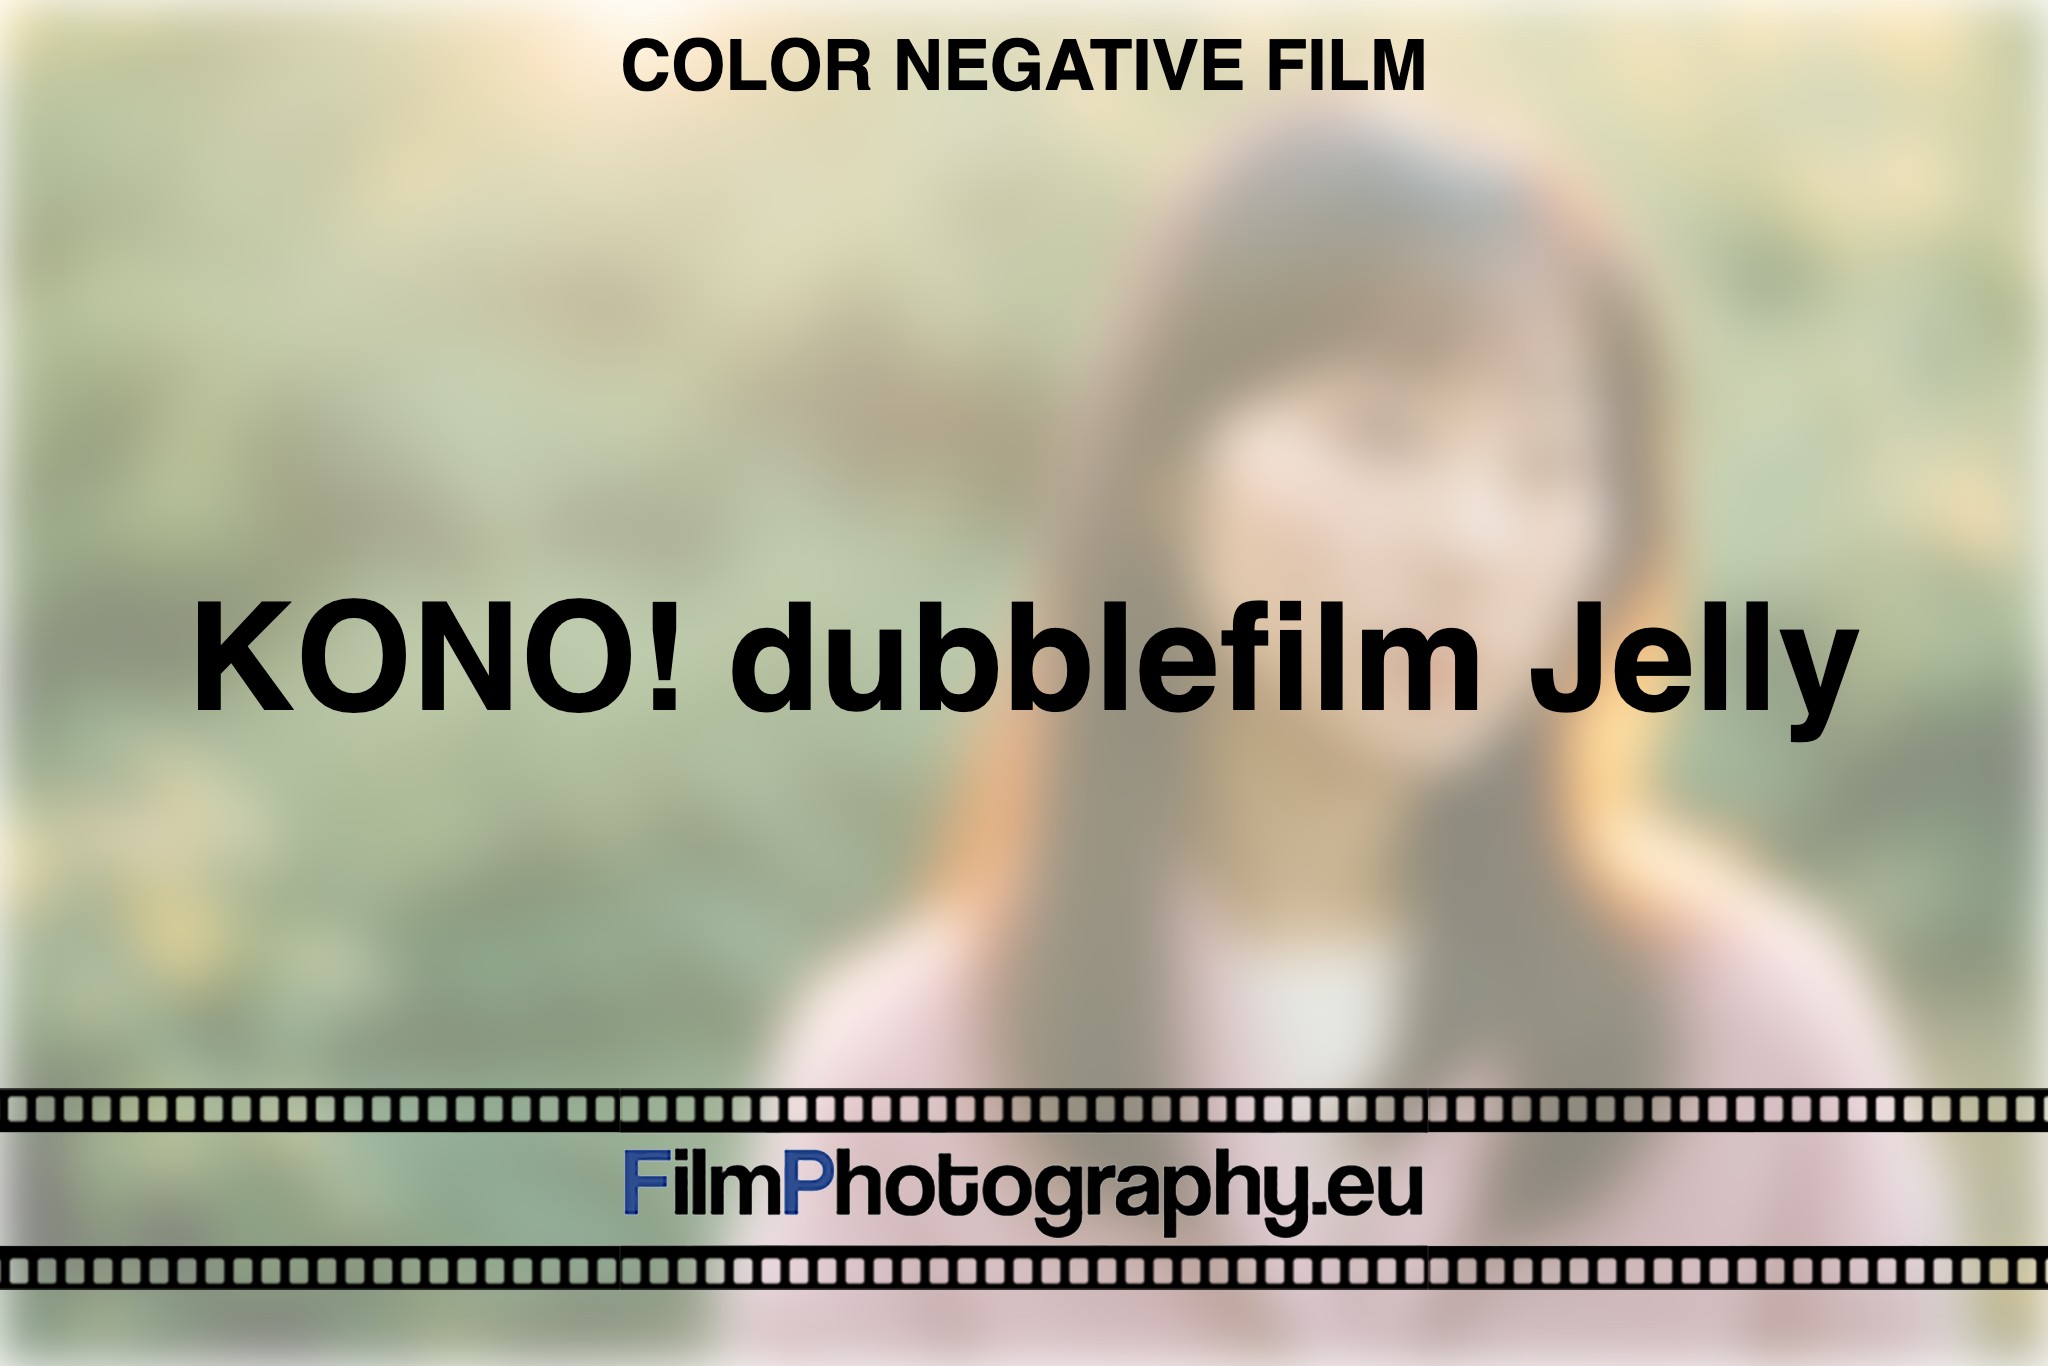 kono-dubblefilm-jelly-color-negative-film-bnv